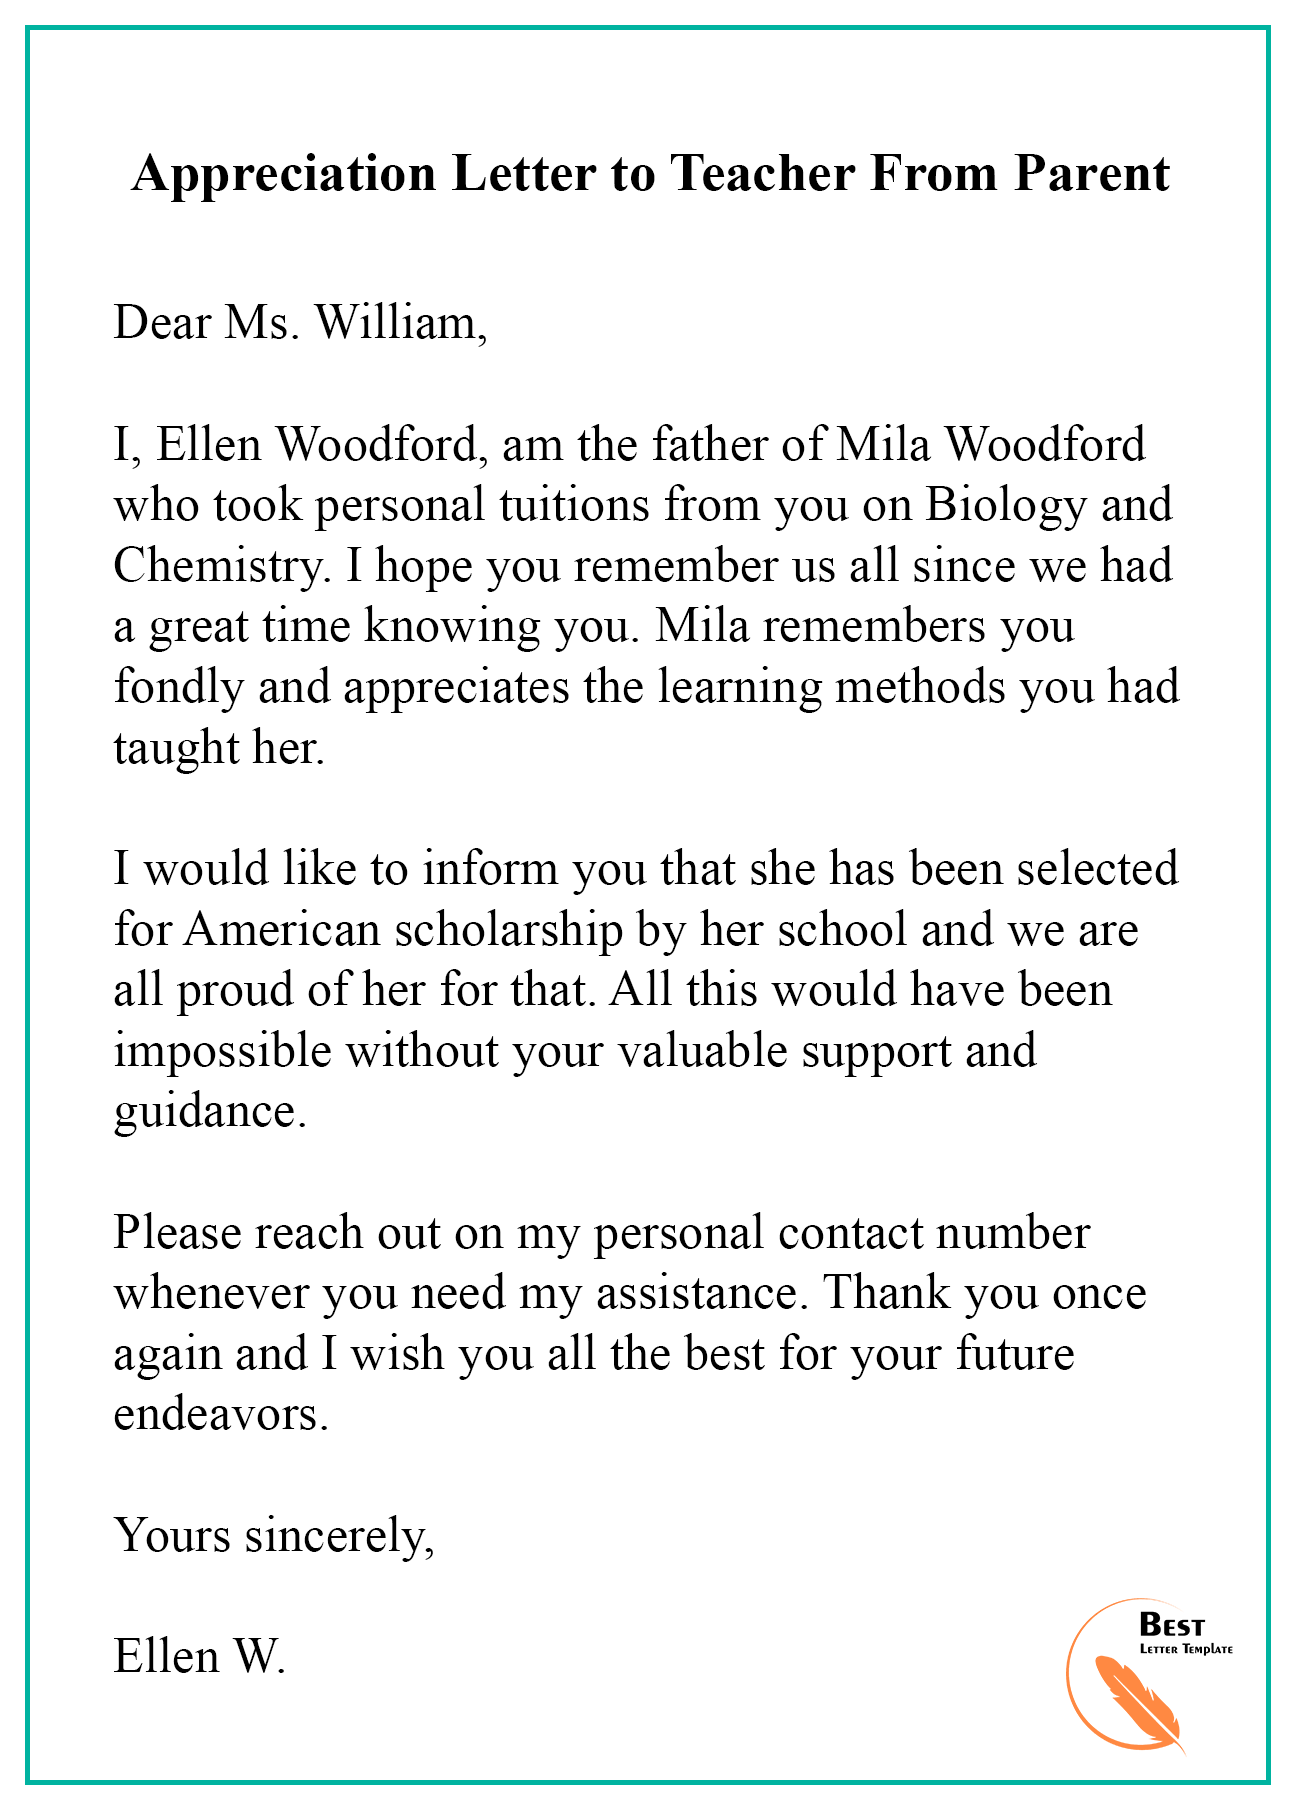 Letter Of Appreciation For Teacher